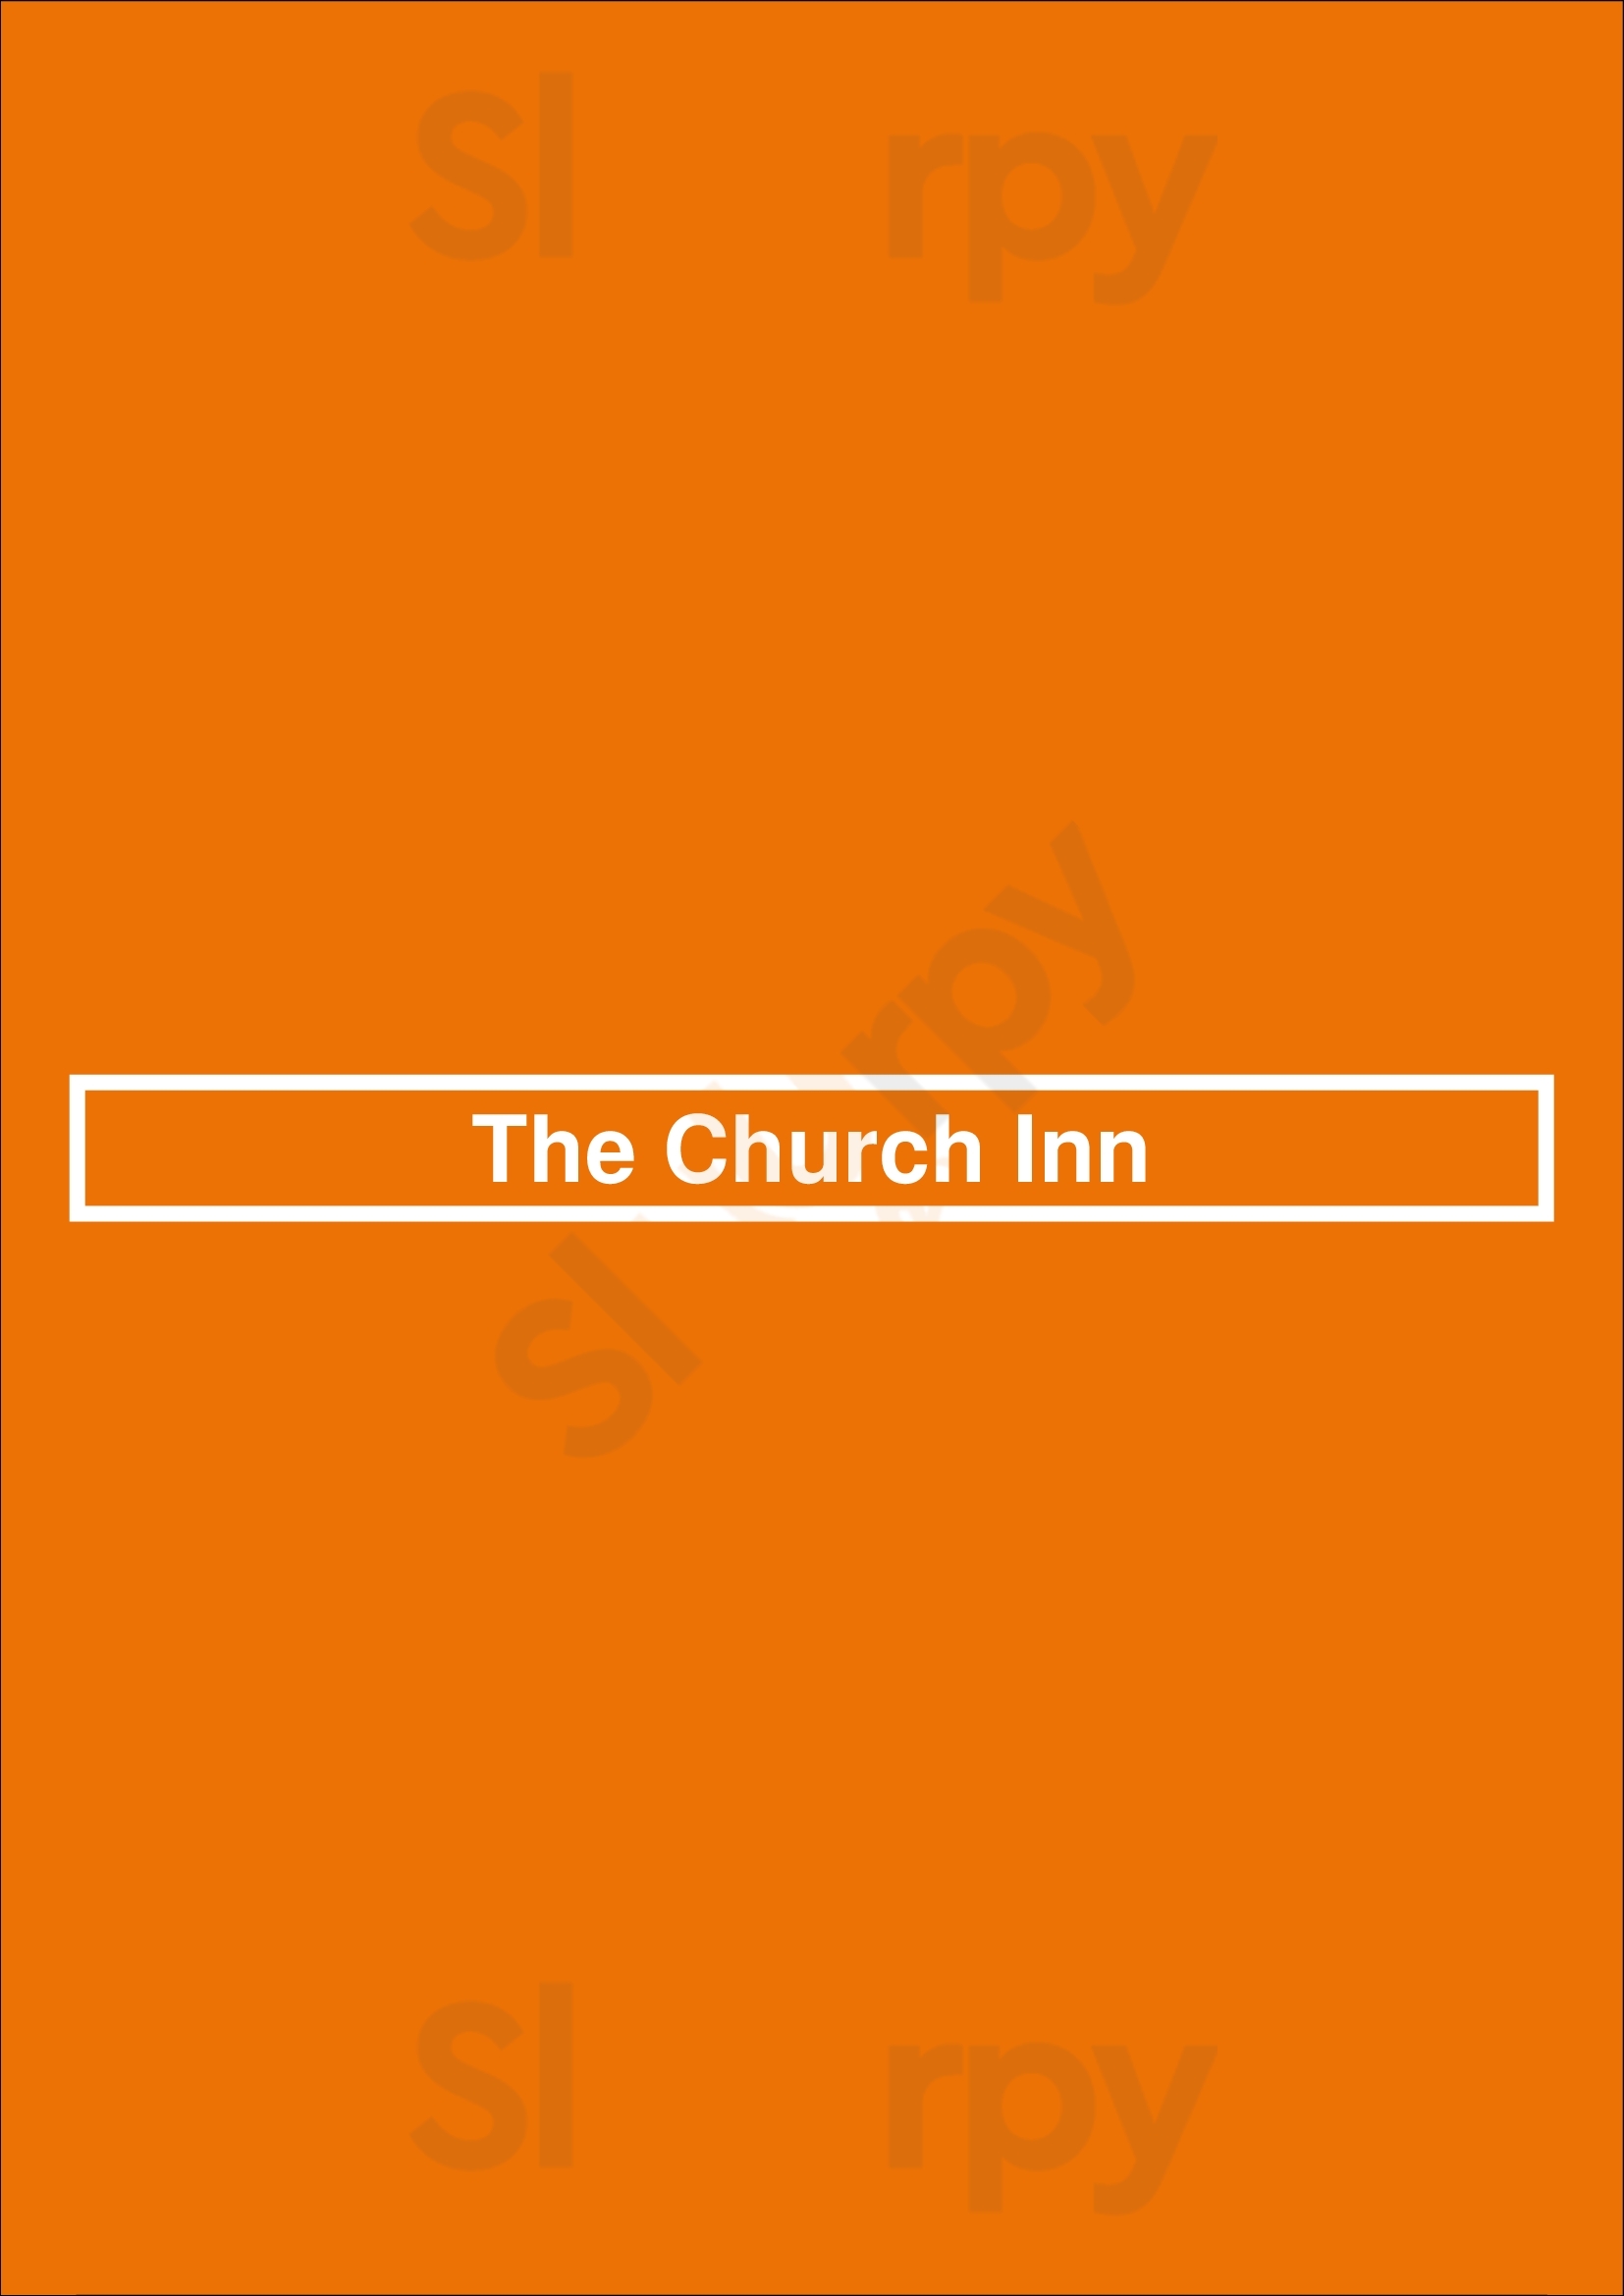 The Church Inn Bedwellty Blackwood Menu - 1